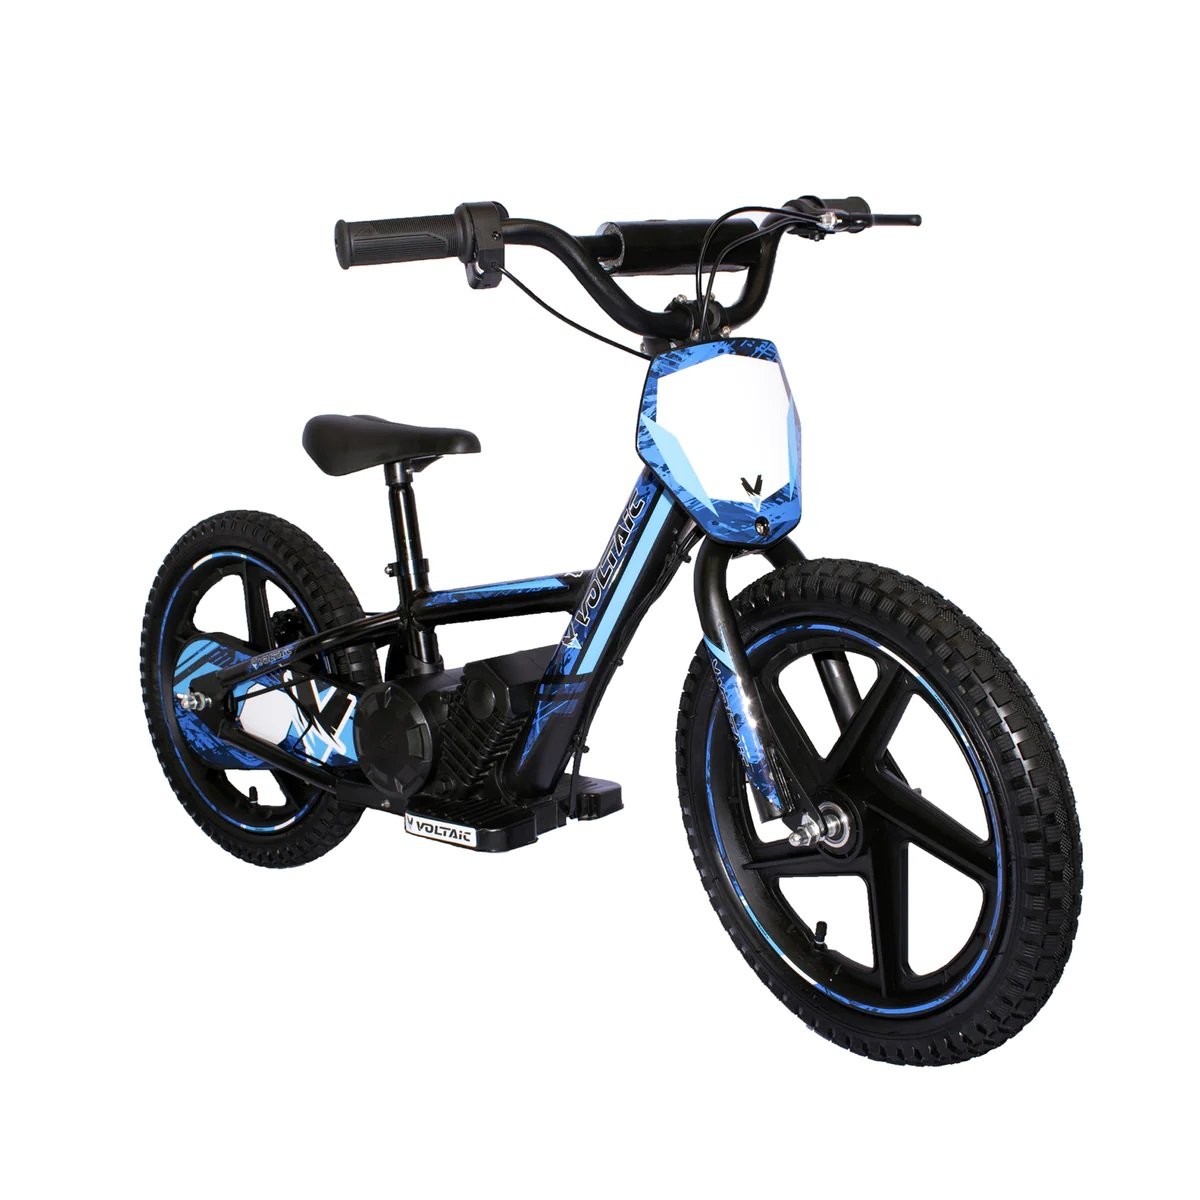 Voltaic 16'' LION 250W 24V Removable Battery Kids Electric Balance Bike, VKD-16BU